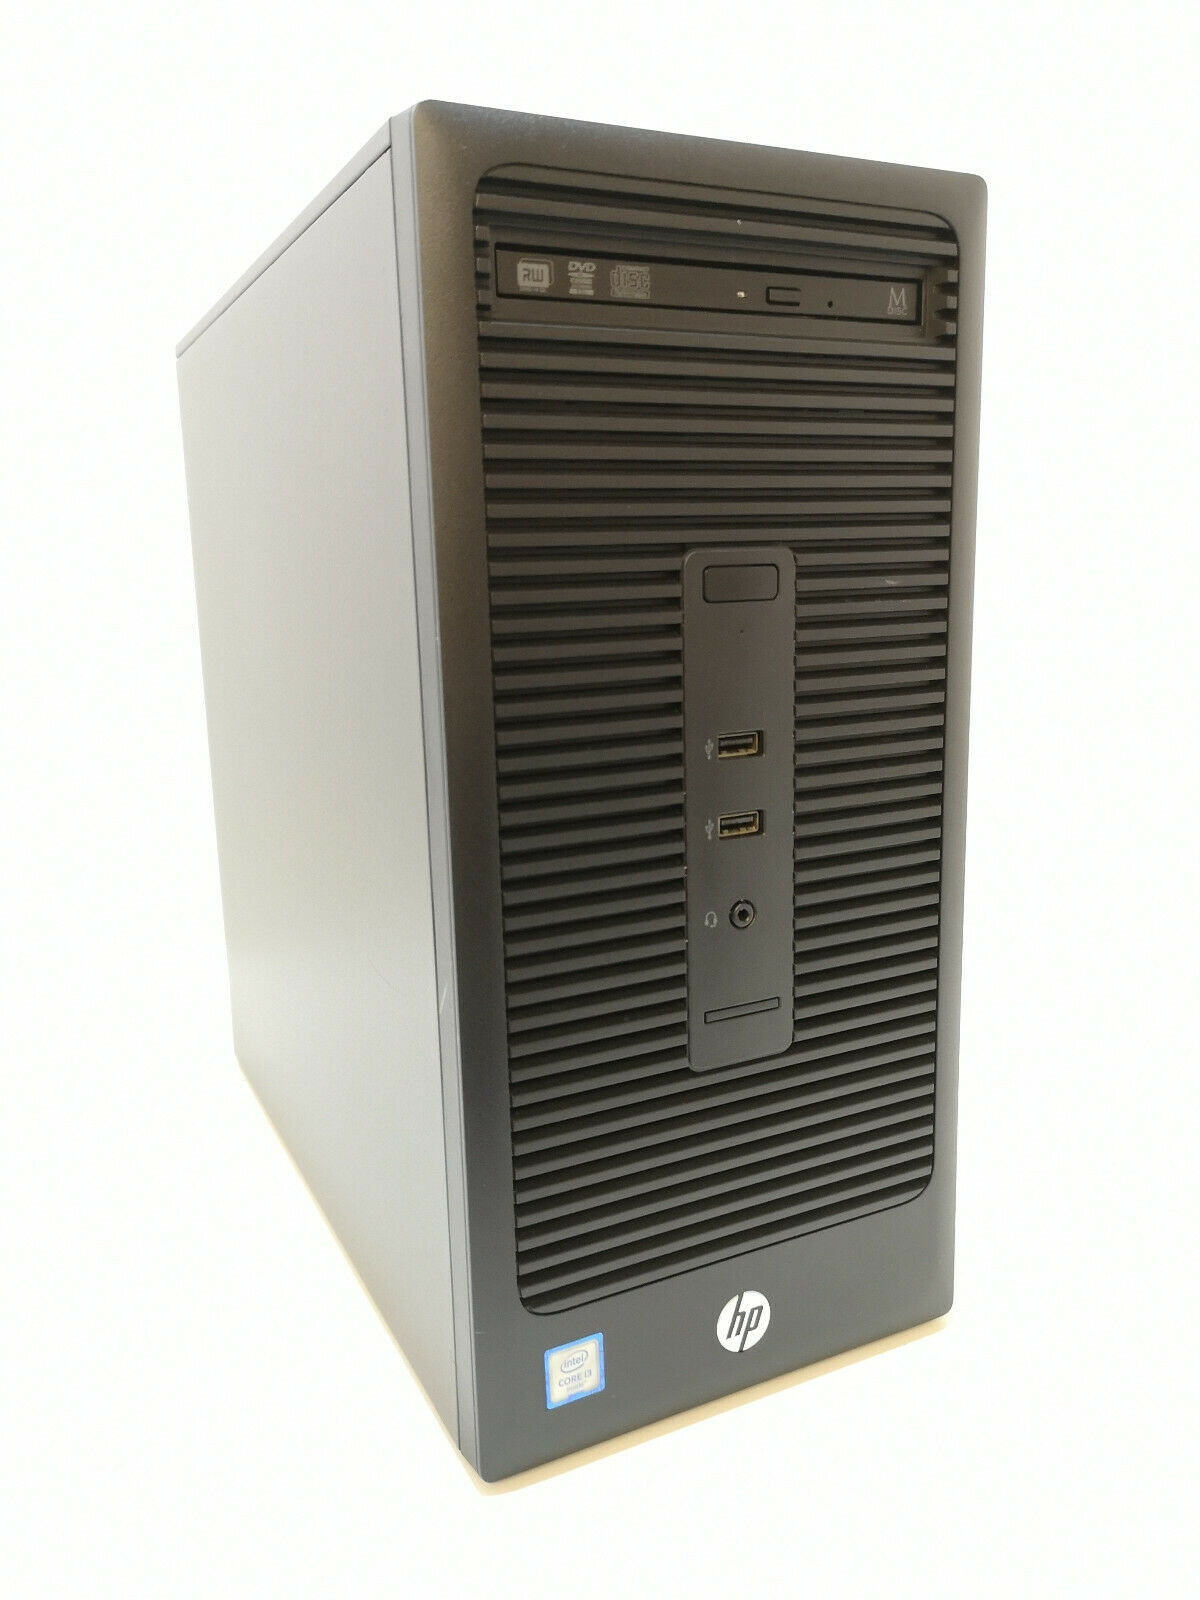 Refurbished HP 280 G2 Desktop Tower PC